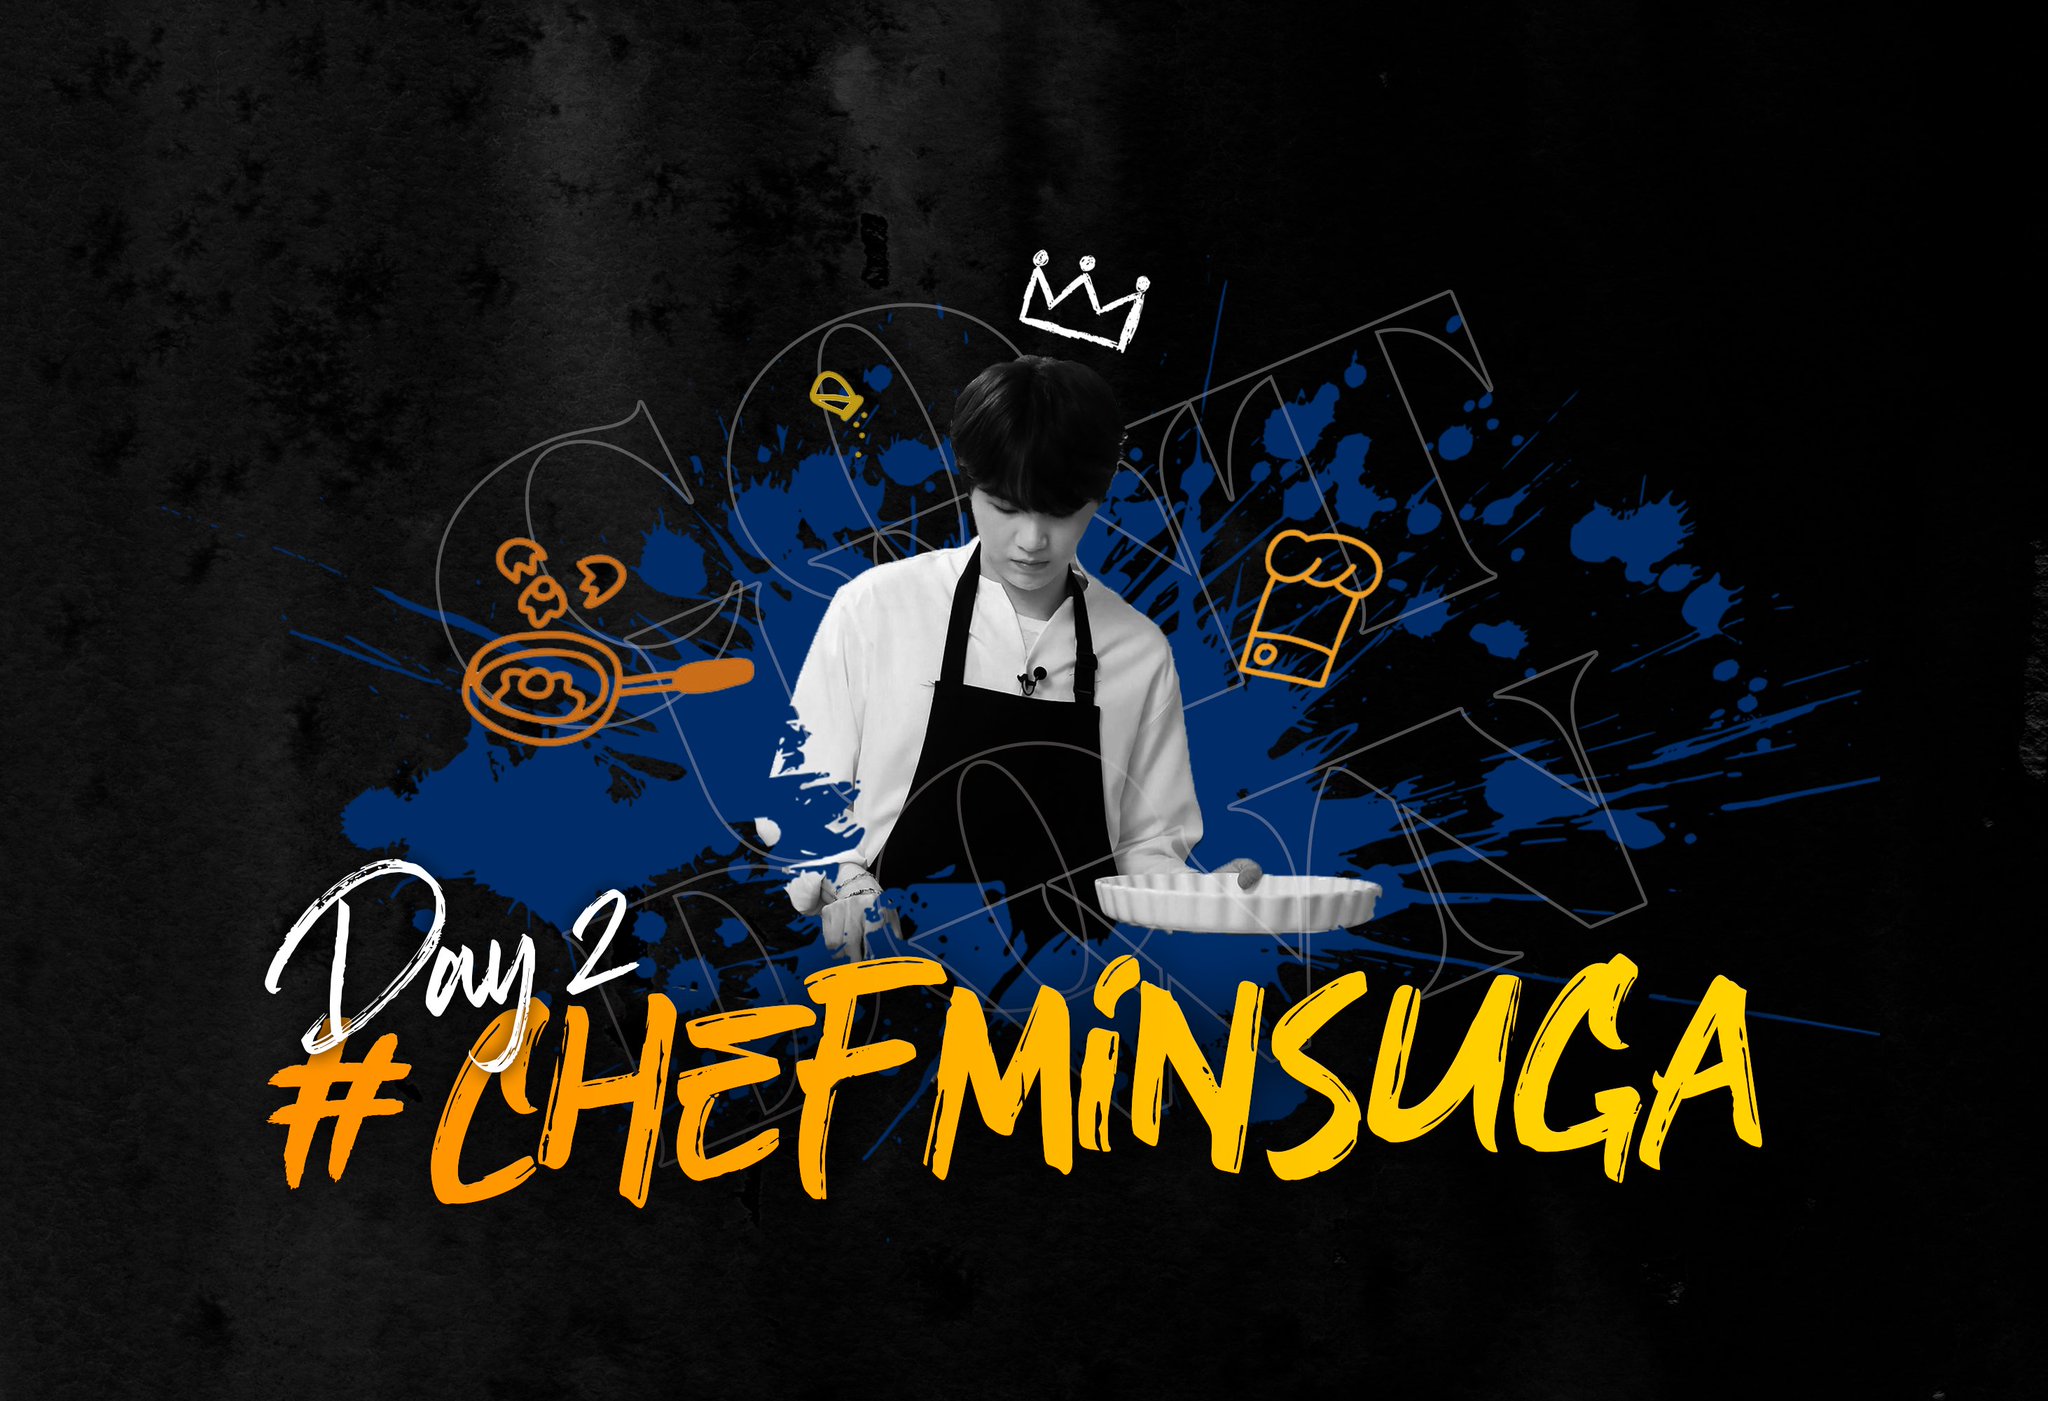 Chef Min SUGA (hashtag to celebrate SUGA's chef skills)